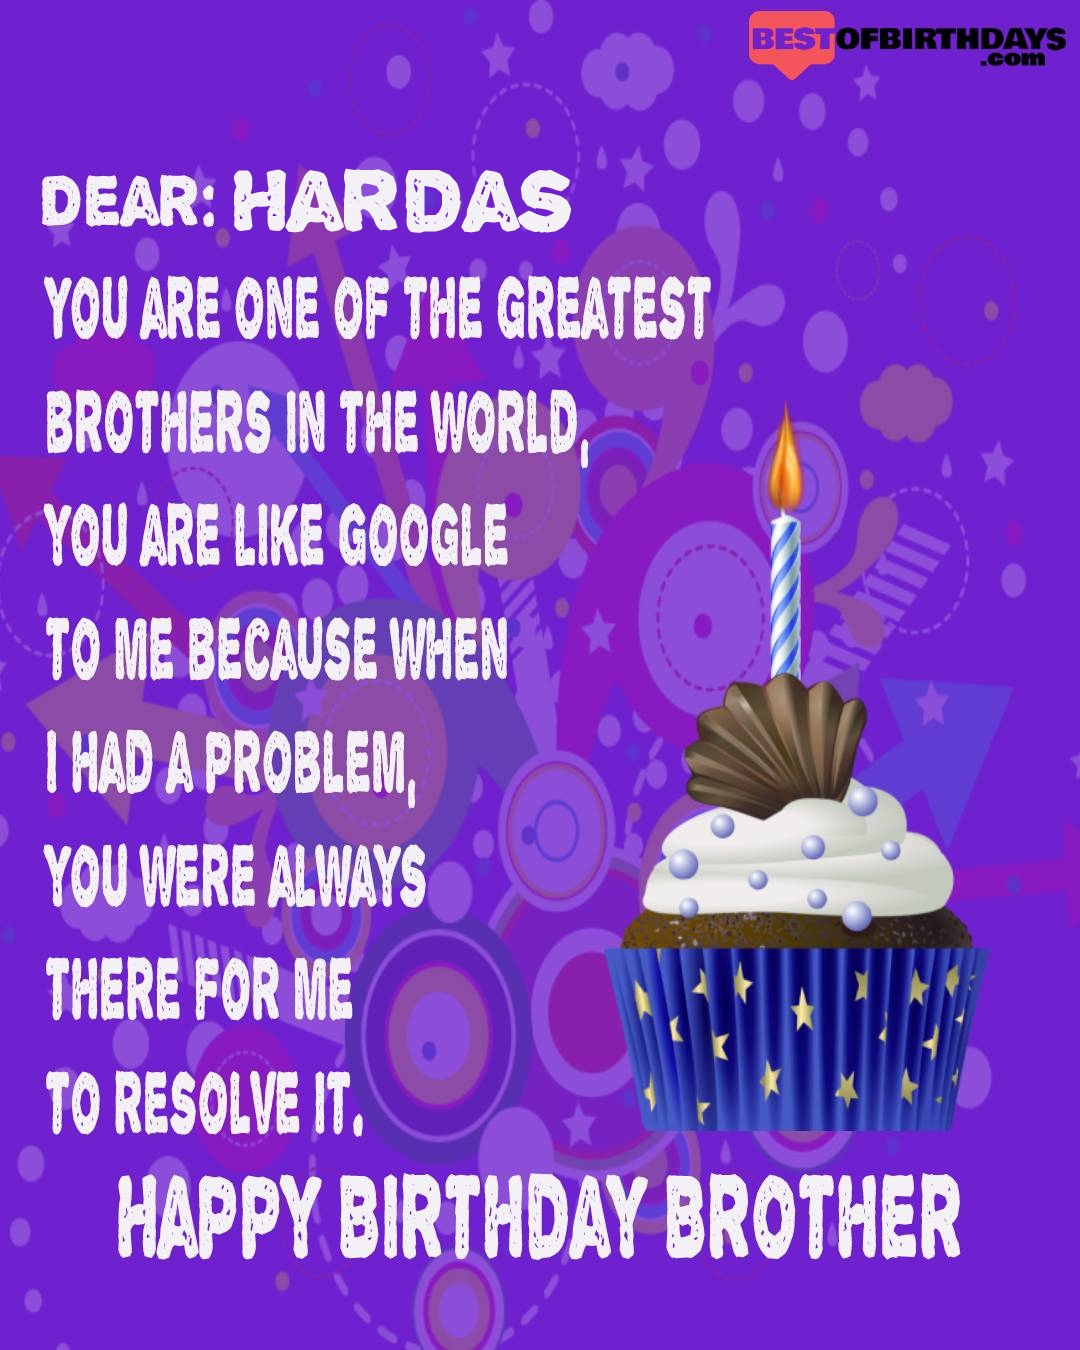 Happy birthday hardas bhai brother bro